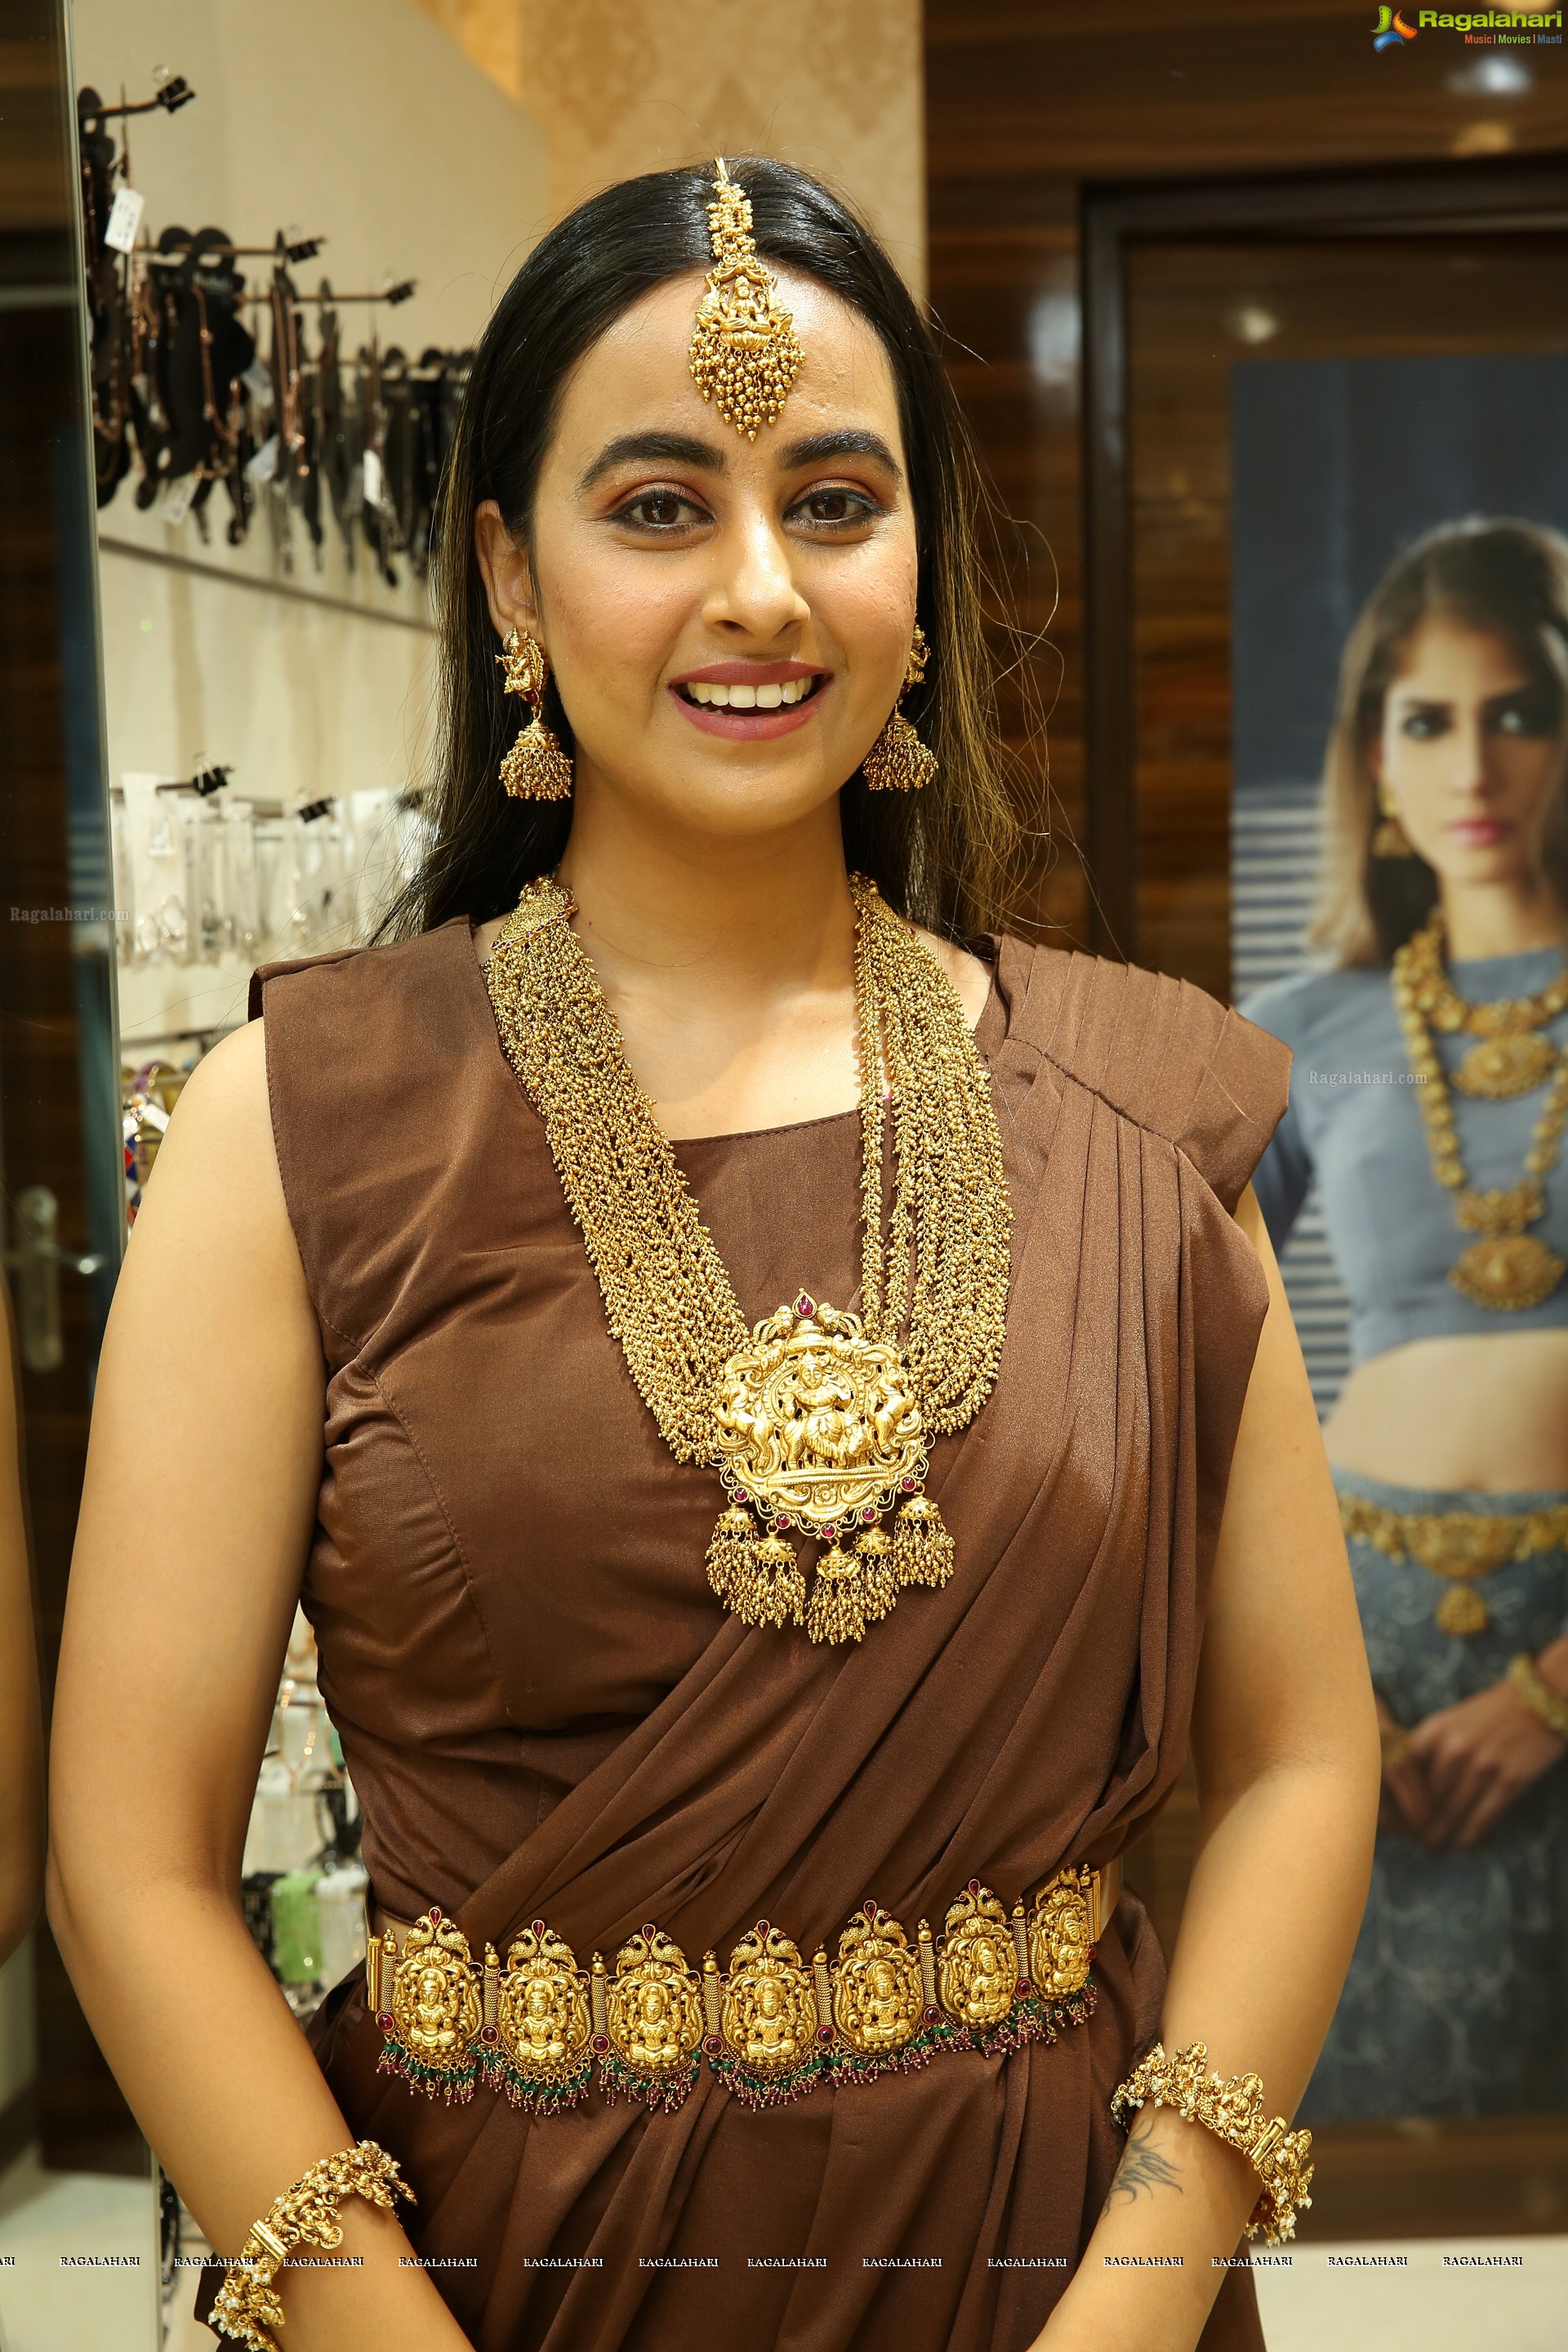 Ameeksha Pawar @ Kushal’s Fashion Jewellery Flagship Store Launch - HD Gallery